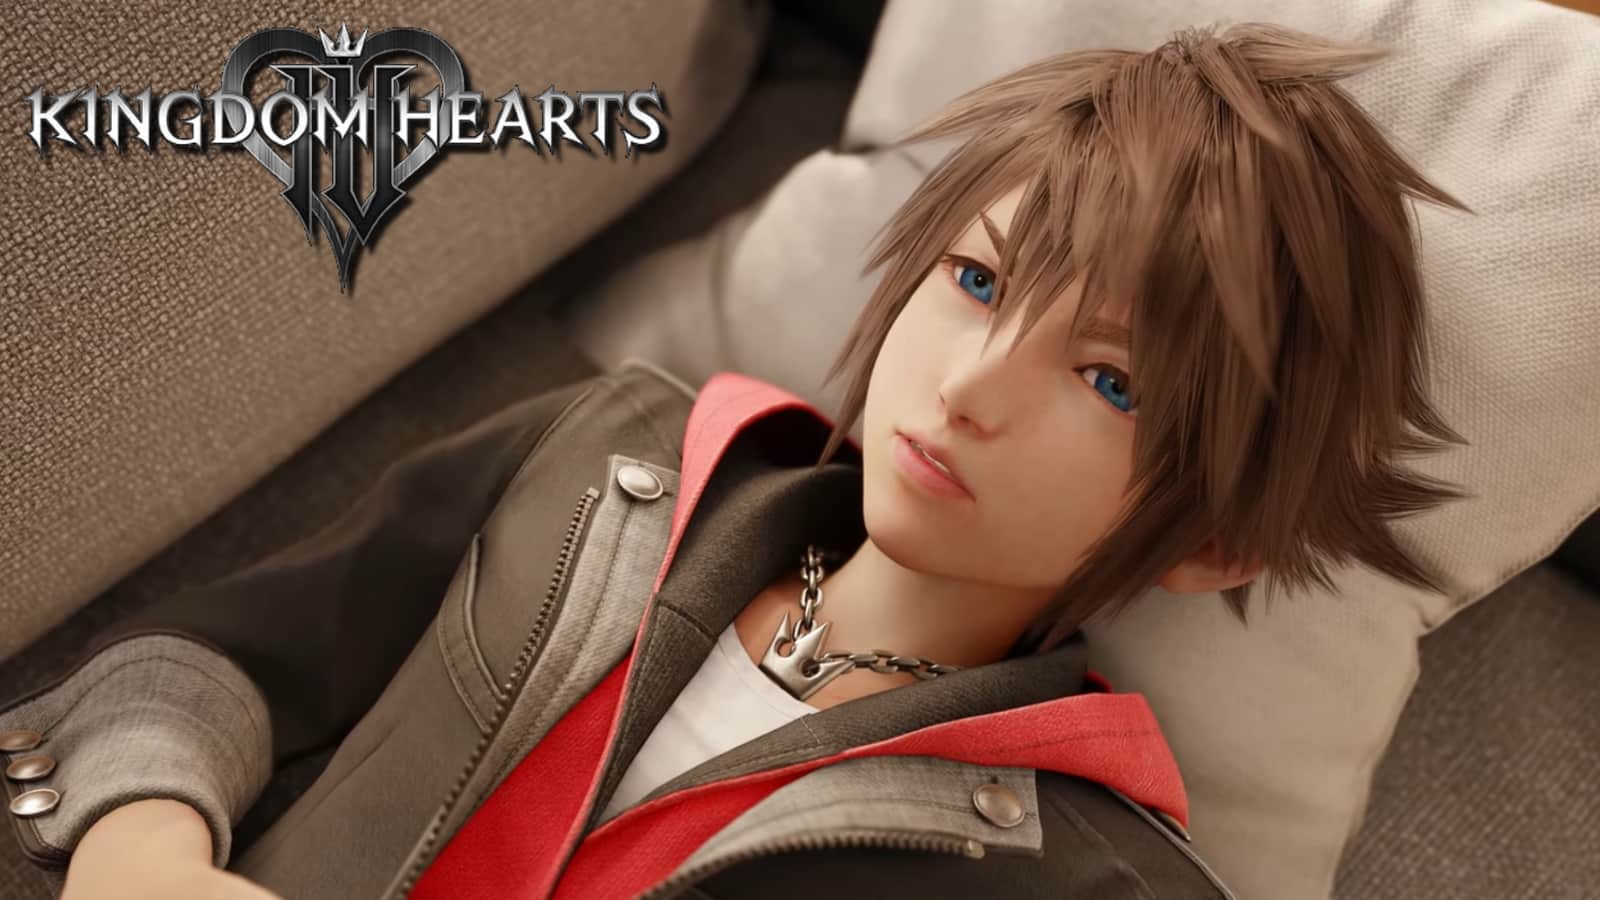 Square Enix Officially Announces Kingdom Hearts IV